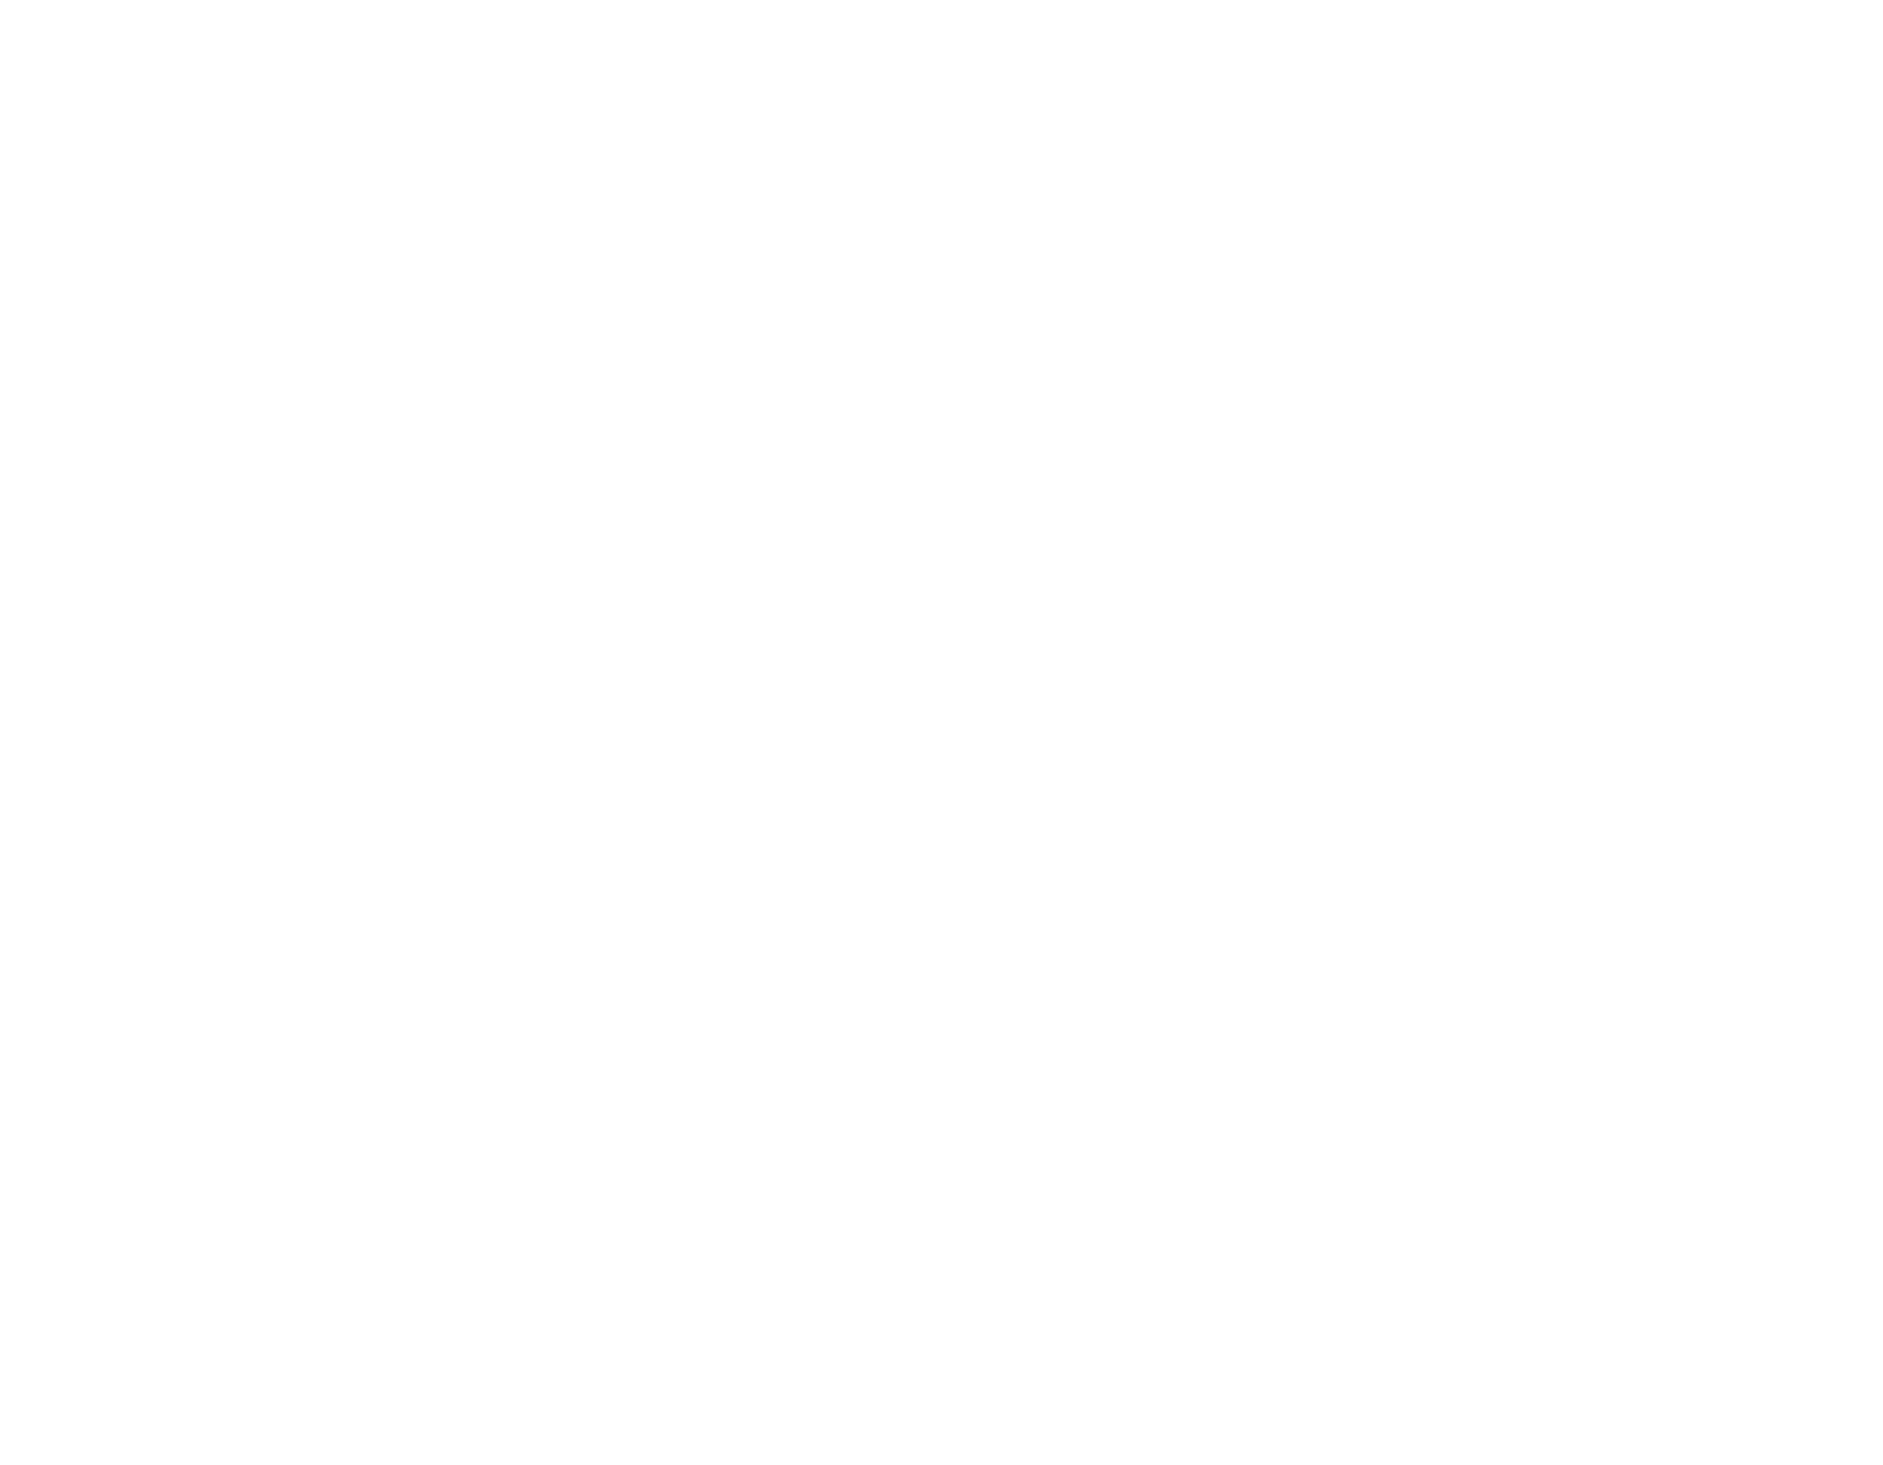 Single Resolution Board (SRB)